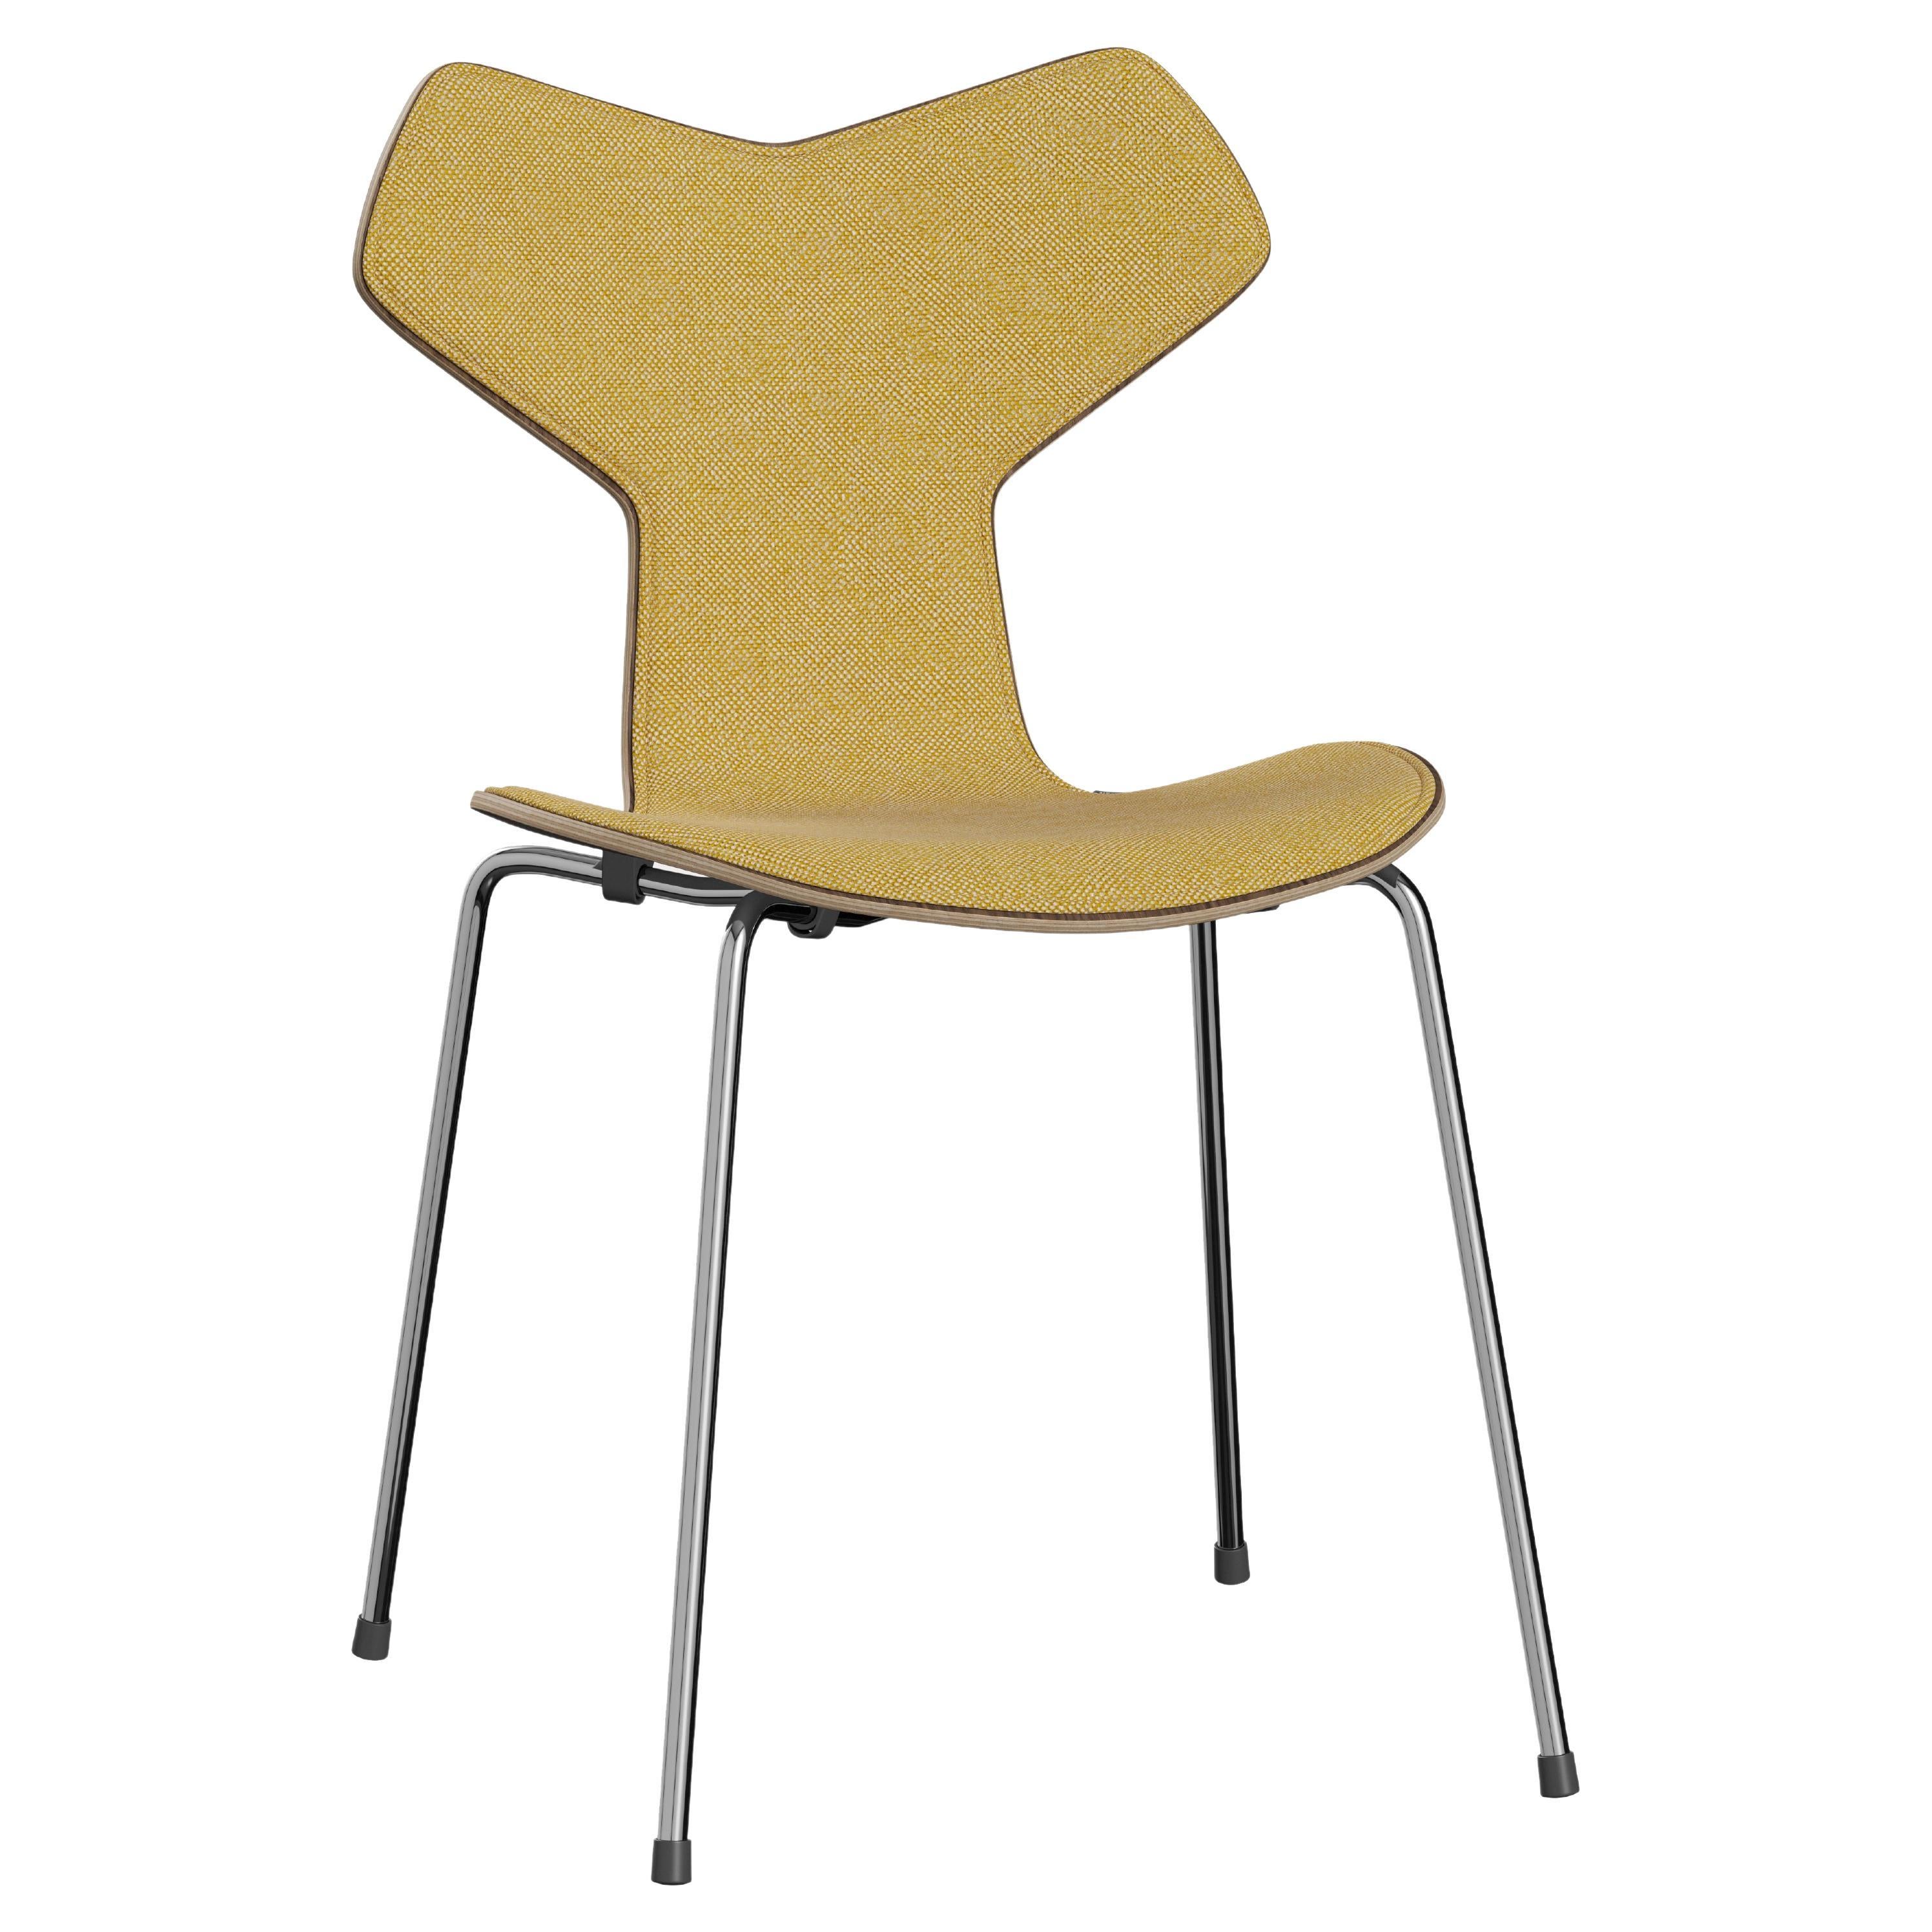 Arne Jacobsen 'Grand Prix' Chair for Fritz Hansen in Partial Fabric Upholstery